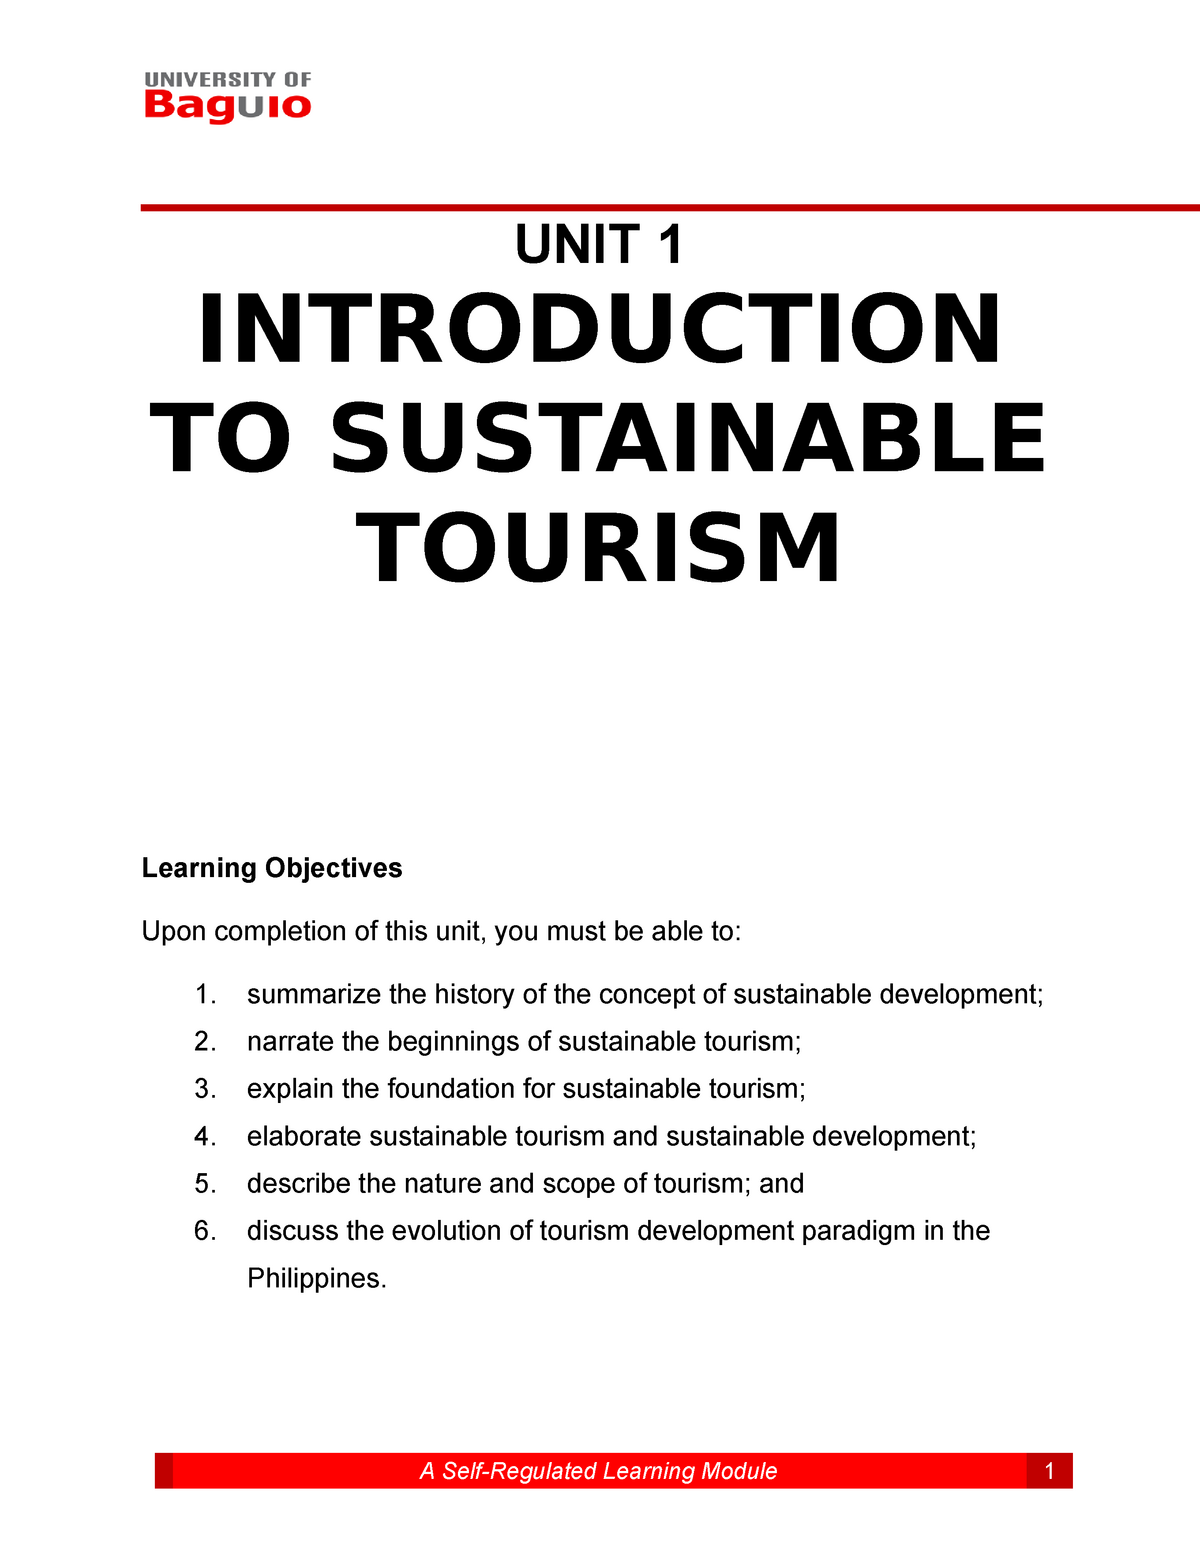 sustainable tourism reflection essay